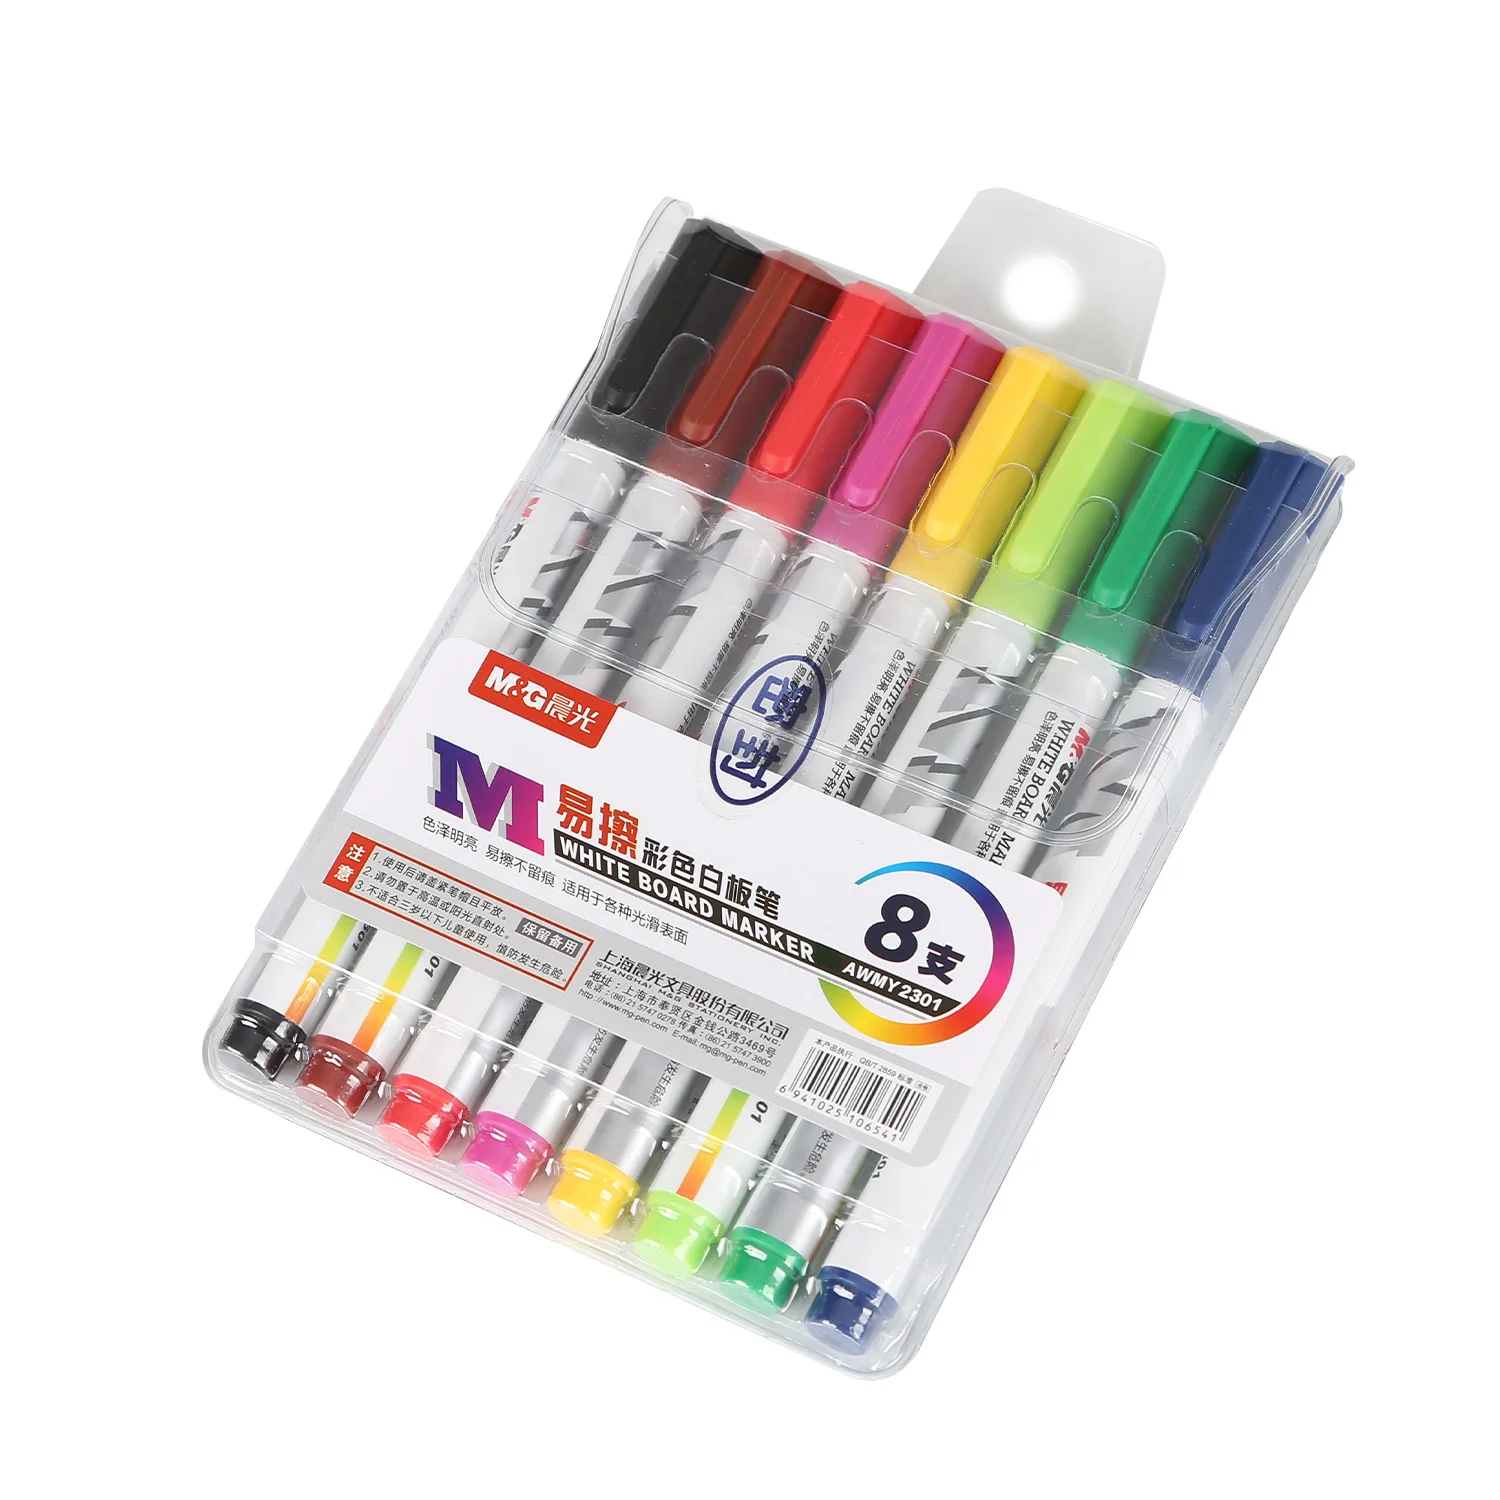 M&G Multiple Colors Dry Erase Promotional 8colors Whiteboard Marker Set (1600374393369)